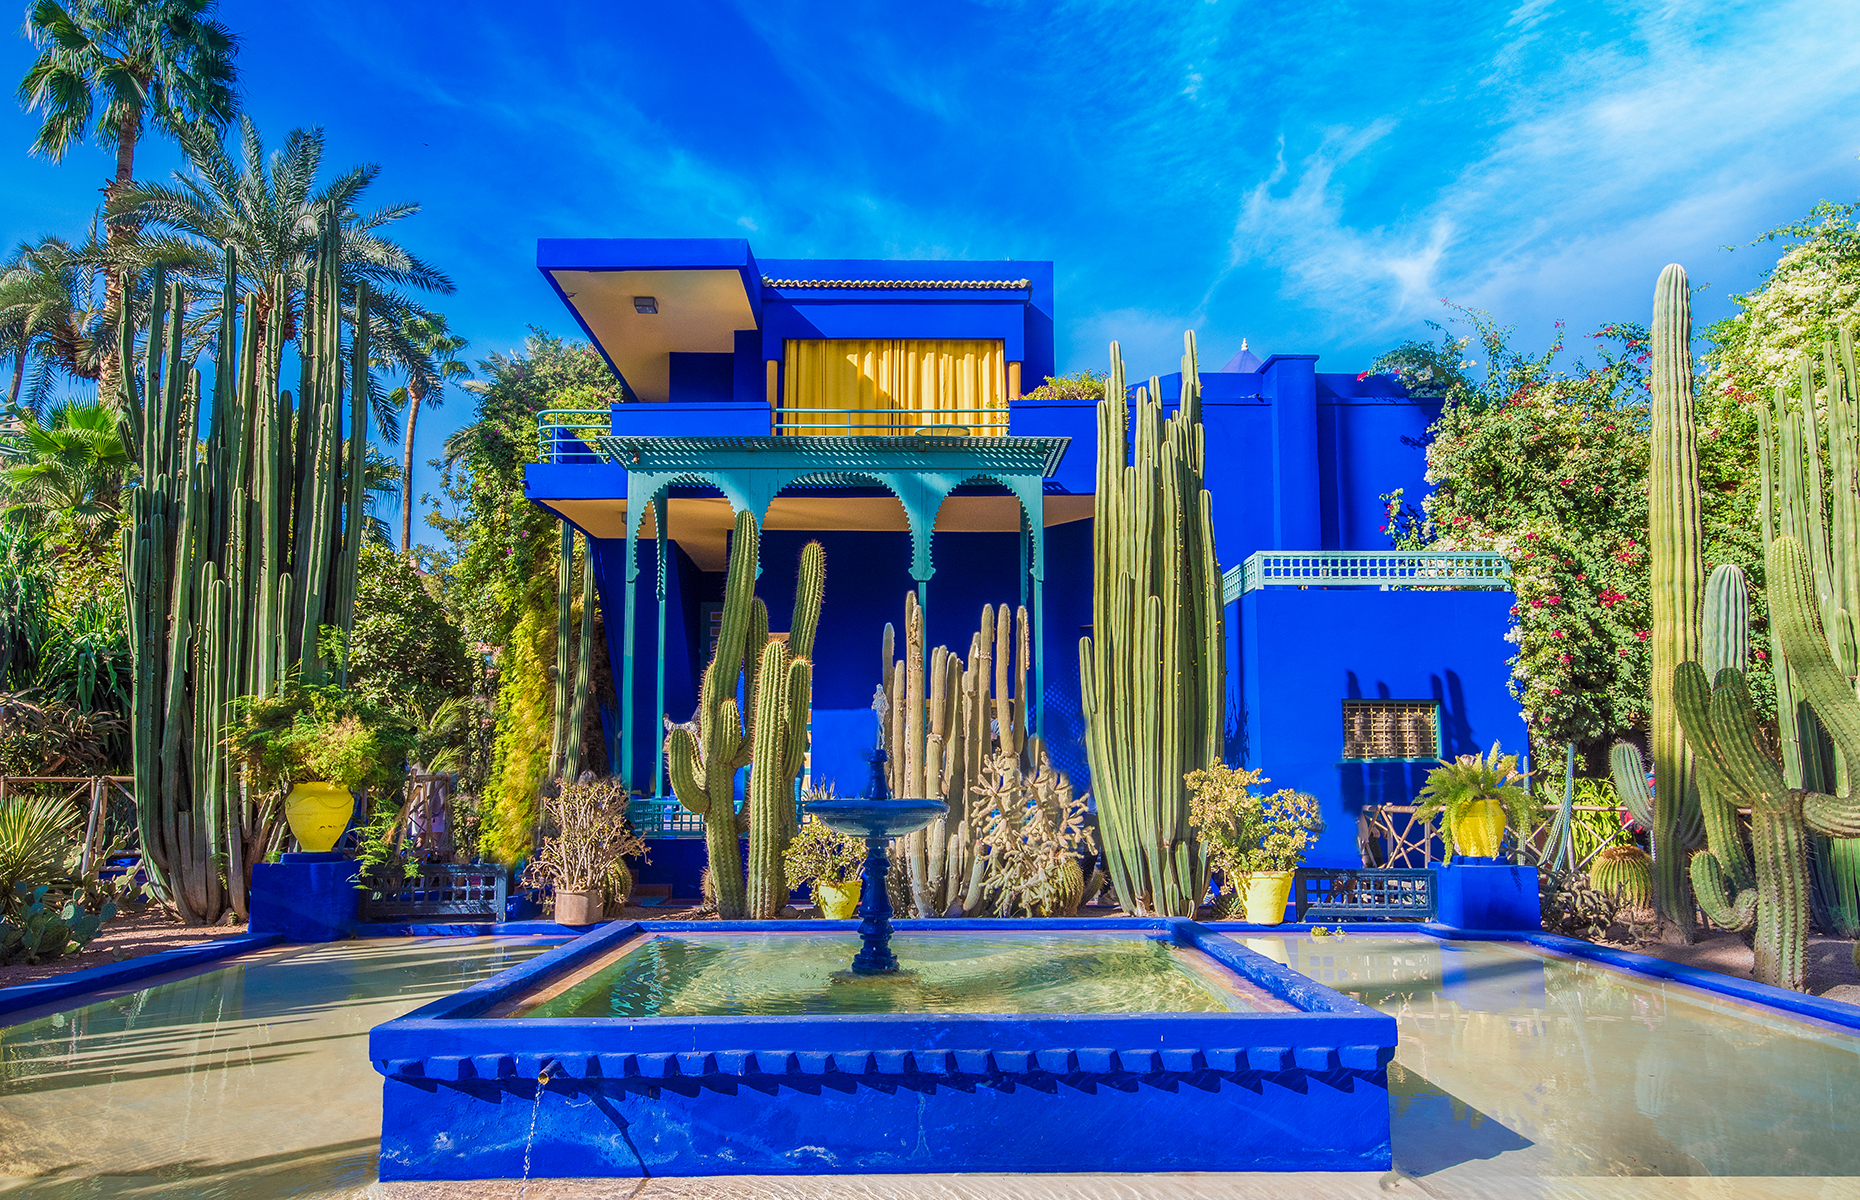 Jardin Majorelle in Marrakech (Image: Balate Dorin/Shutterstock)